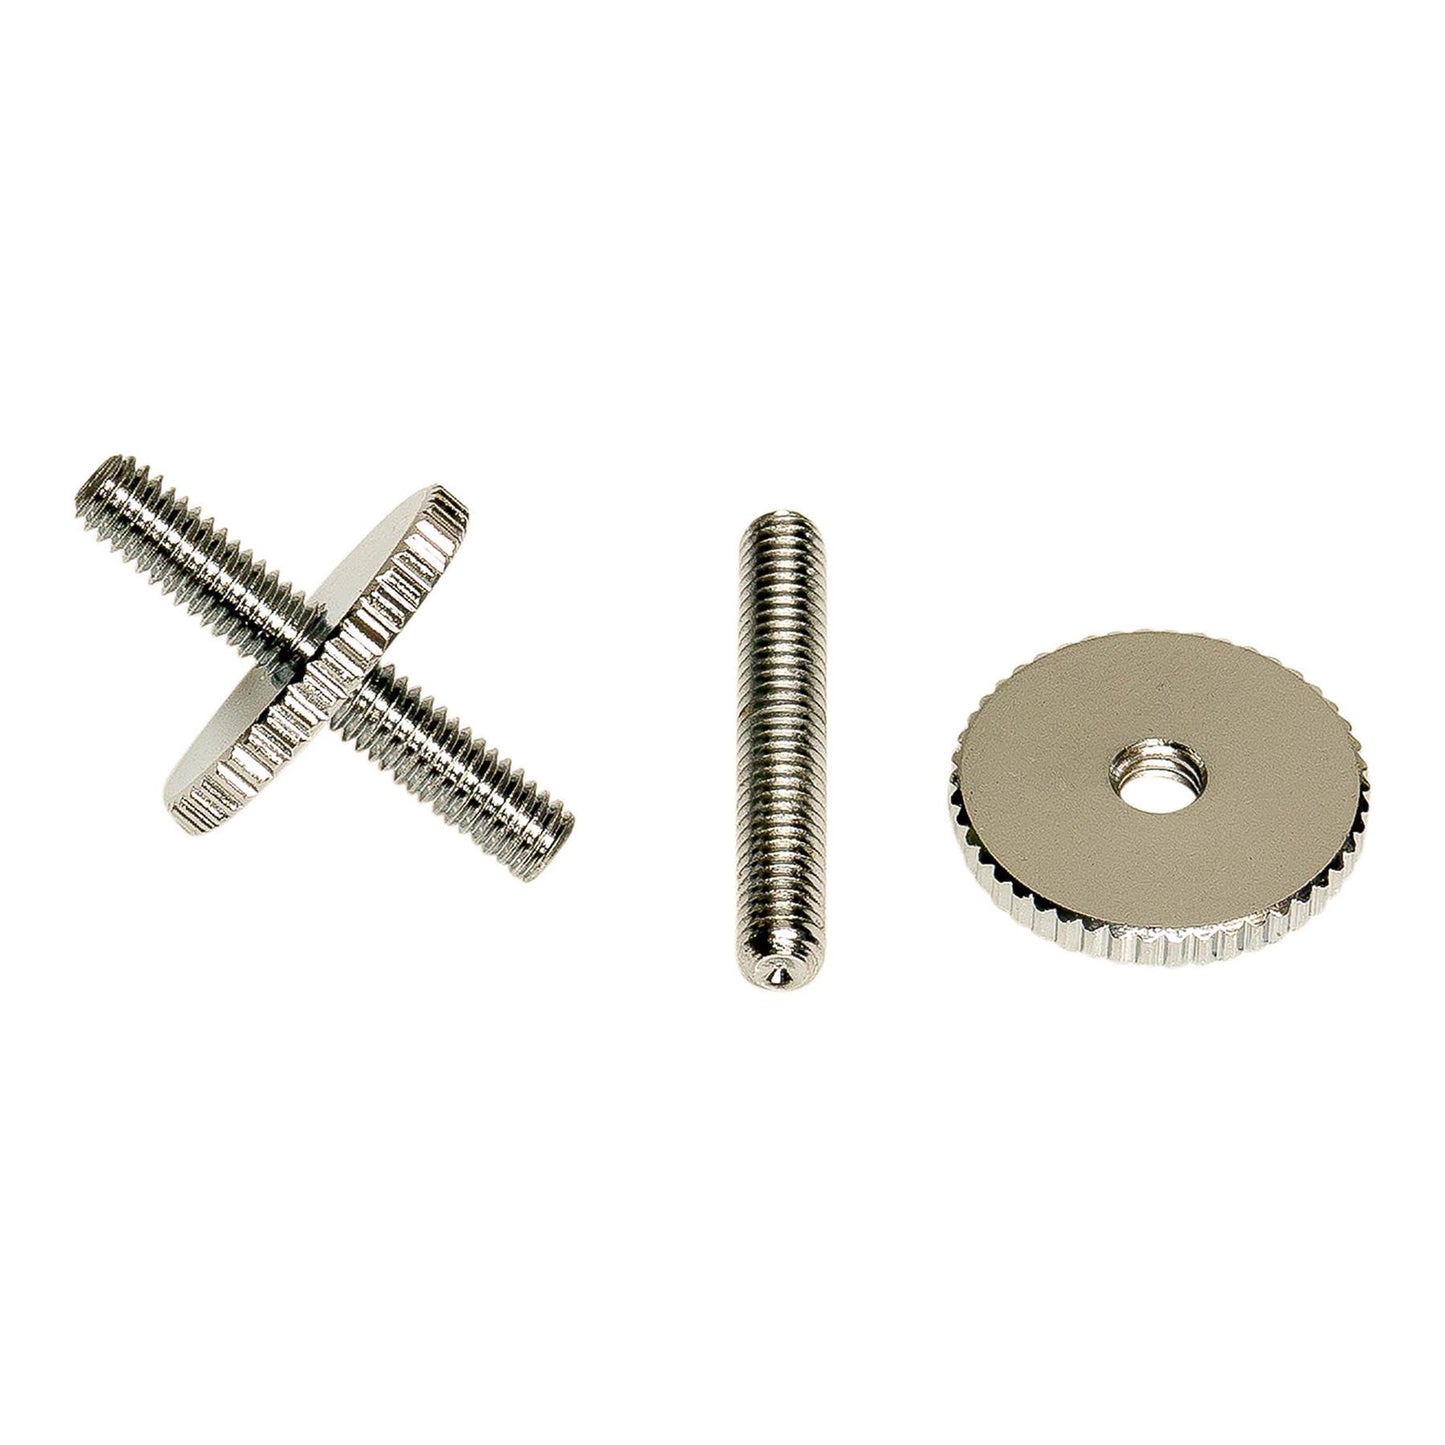 Thumbwheel Height Adjusters for Tune-o-matic Bridges 18mm Diameter M4 Thread